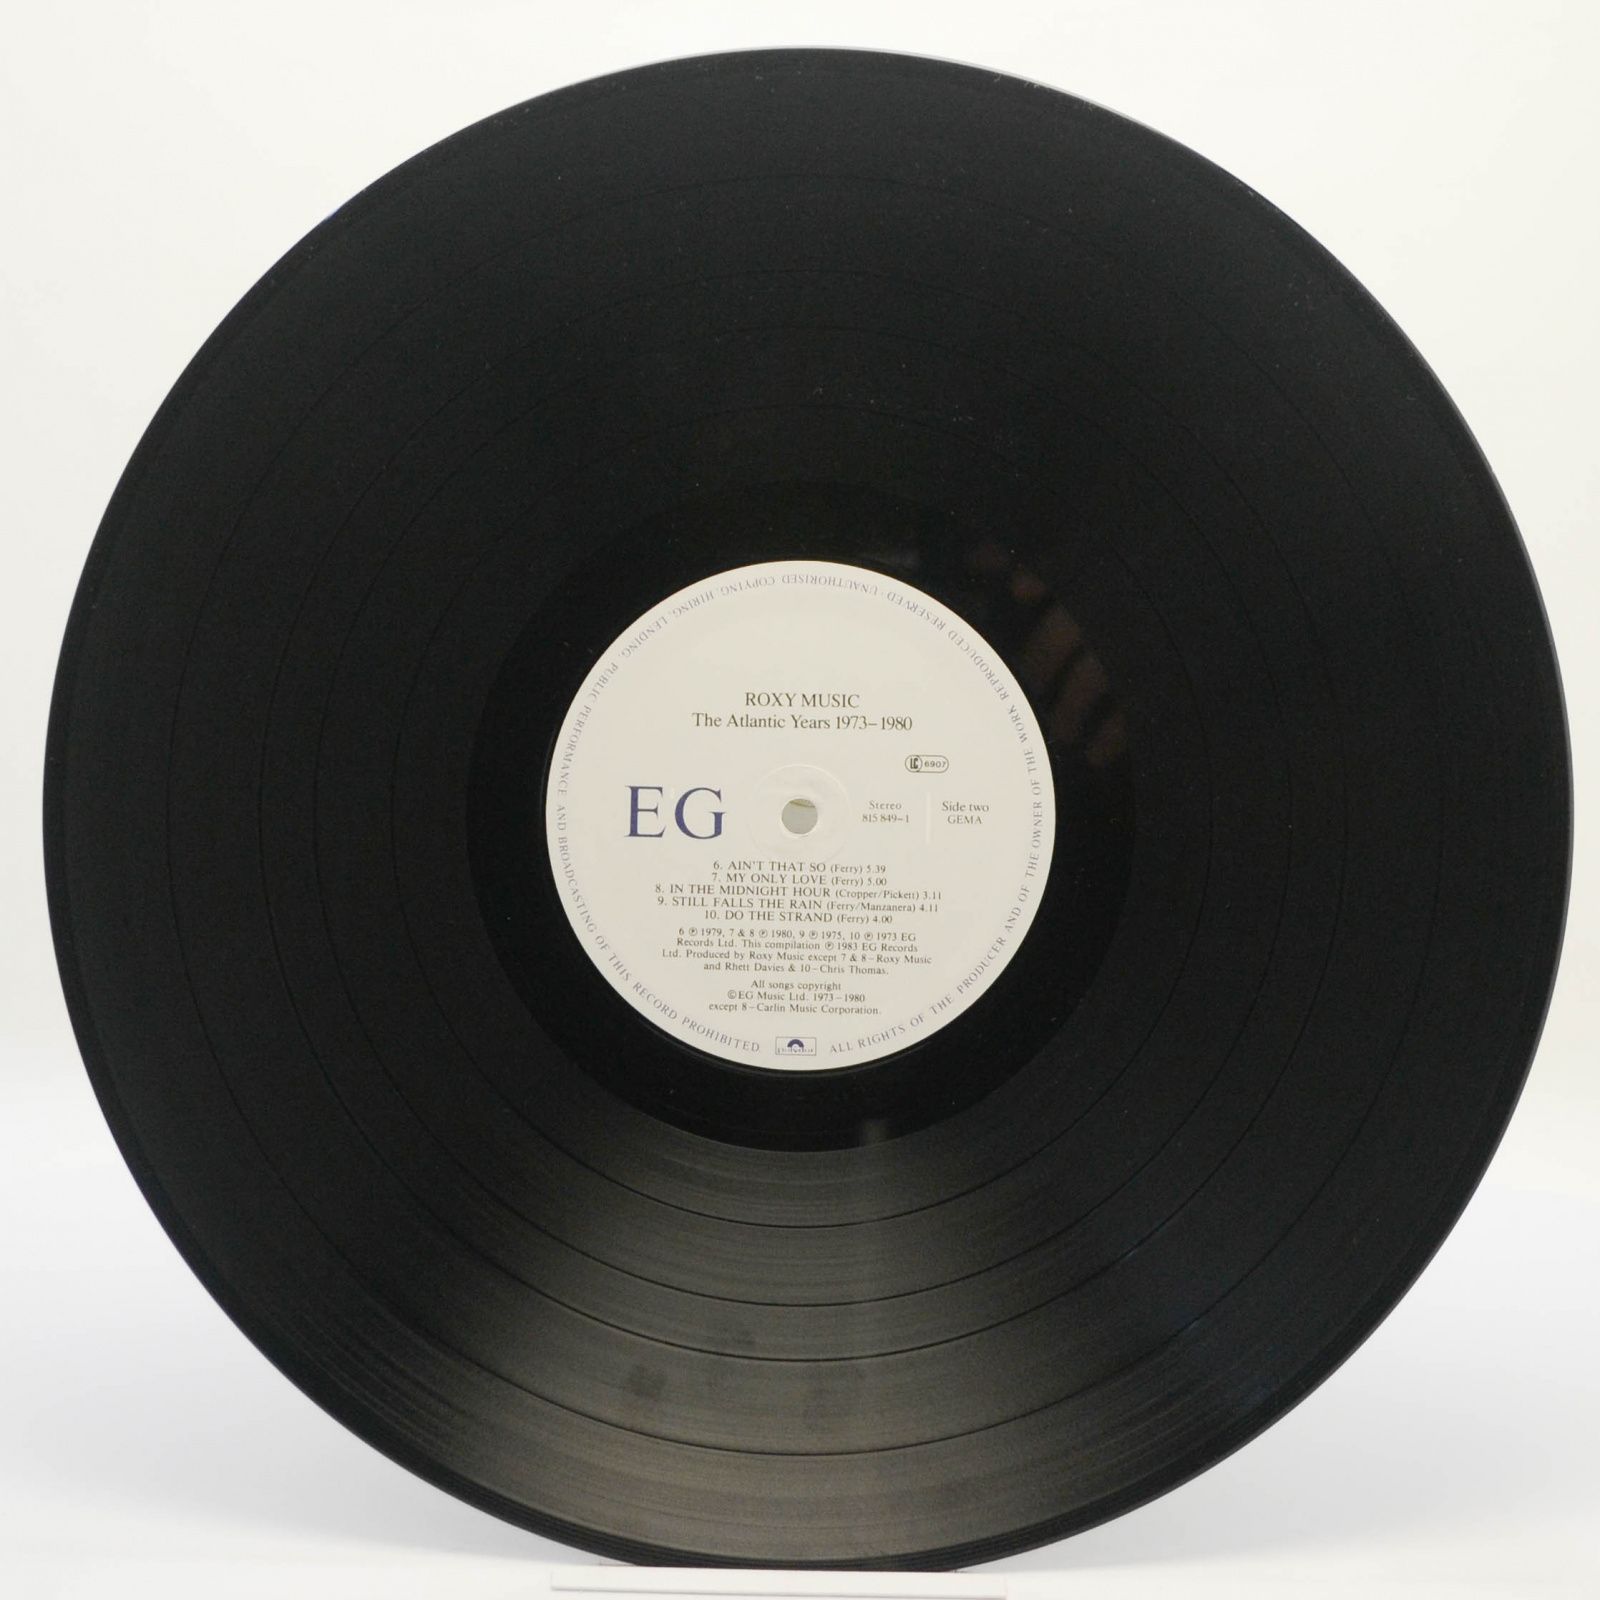 Roxy Music — The Atlantic Years 1973 - 1980, 1983